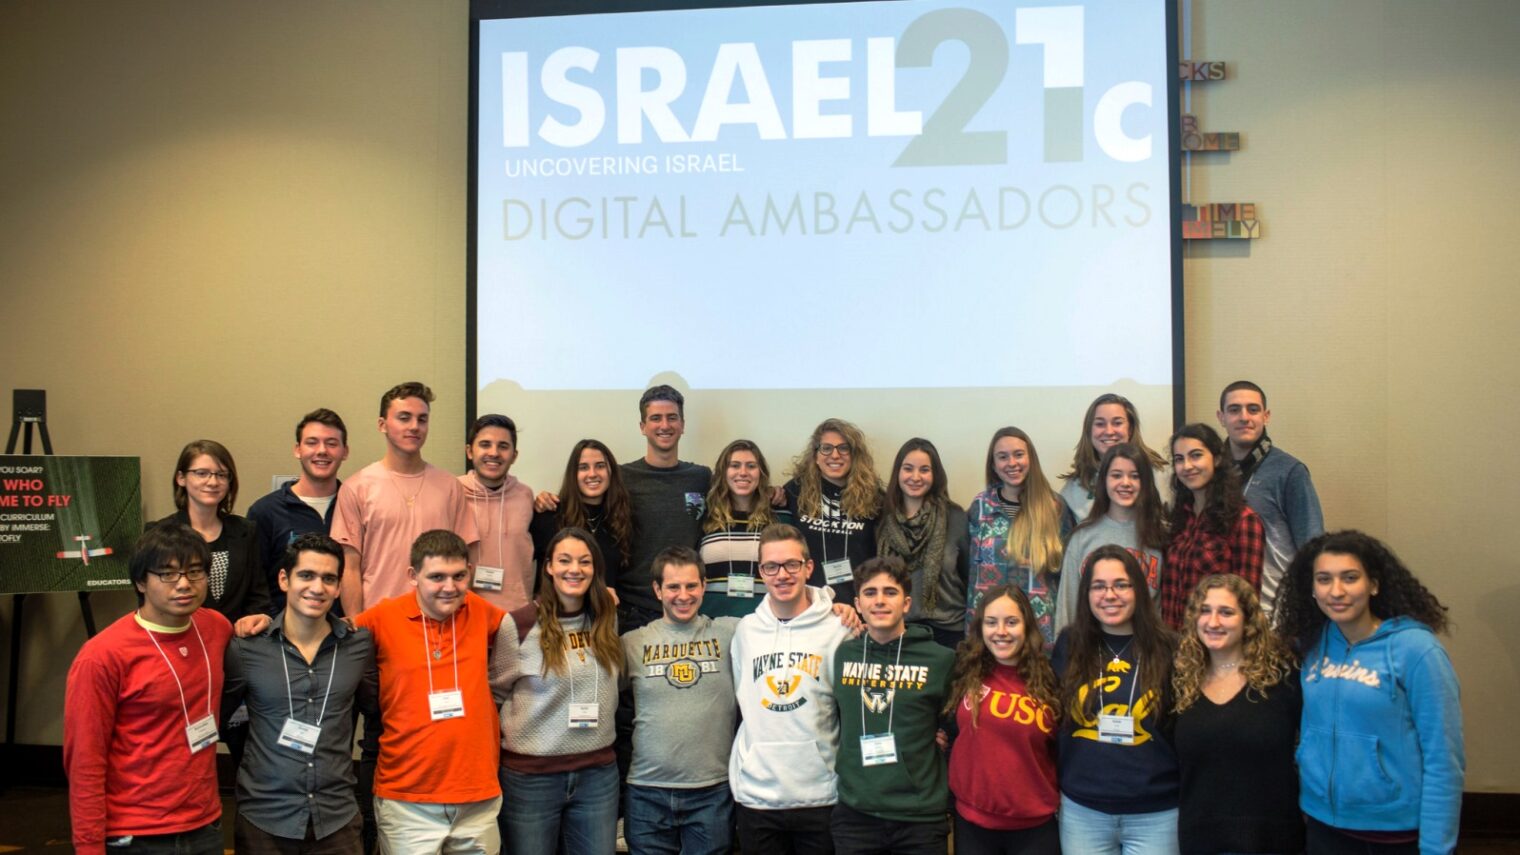 ISRAEL21c’s Digital Ambassadors in Chicago. Photo by Erica Barraca/Erica Barraca Photography